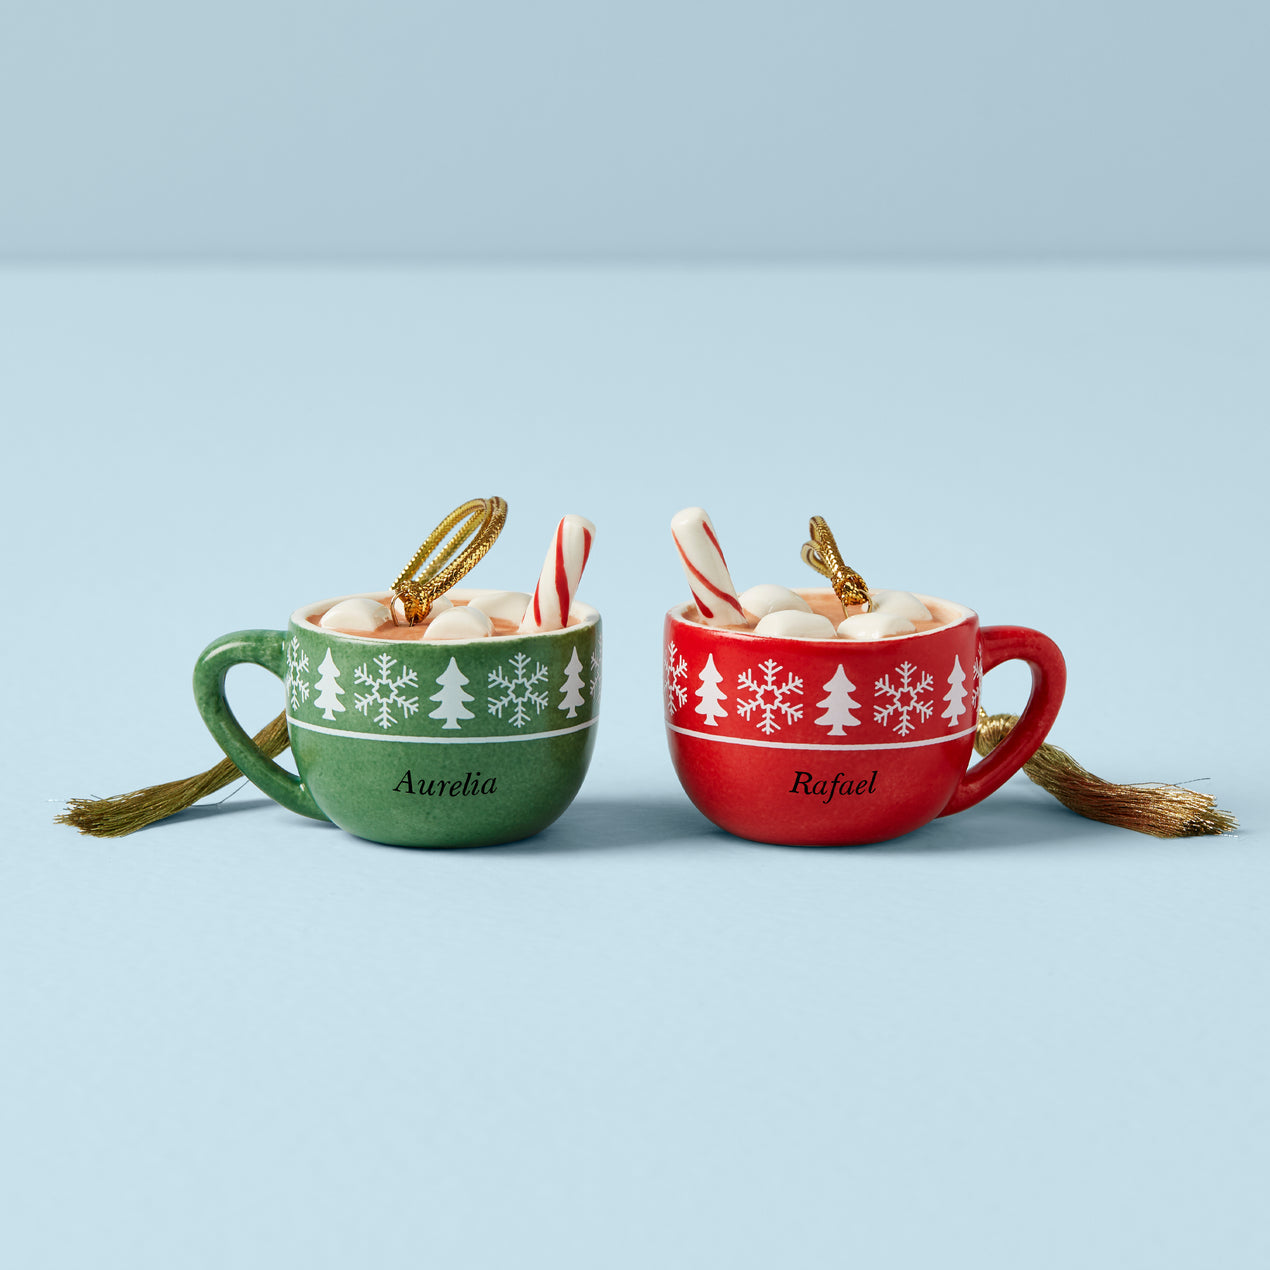 Inspirational Ceramic Travel Coffee Mug, Matching Gift Box